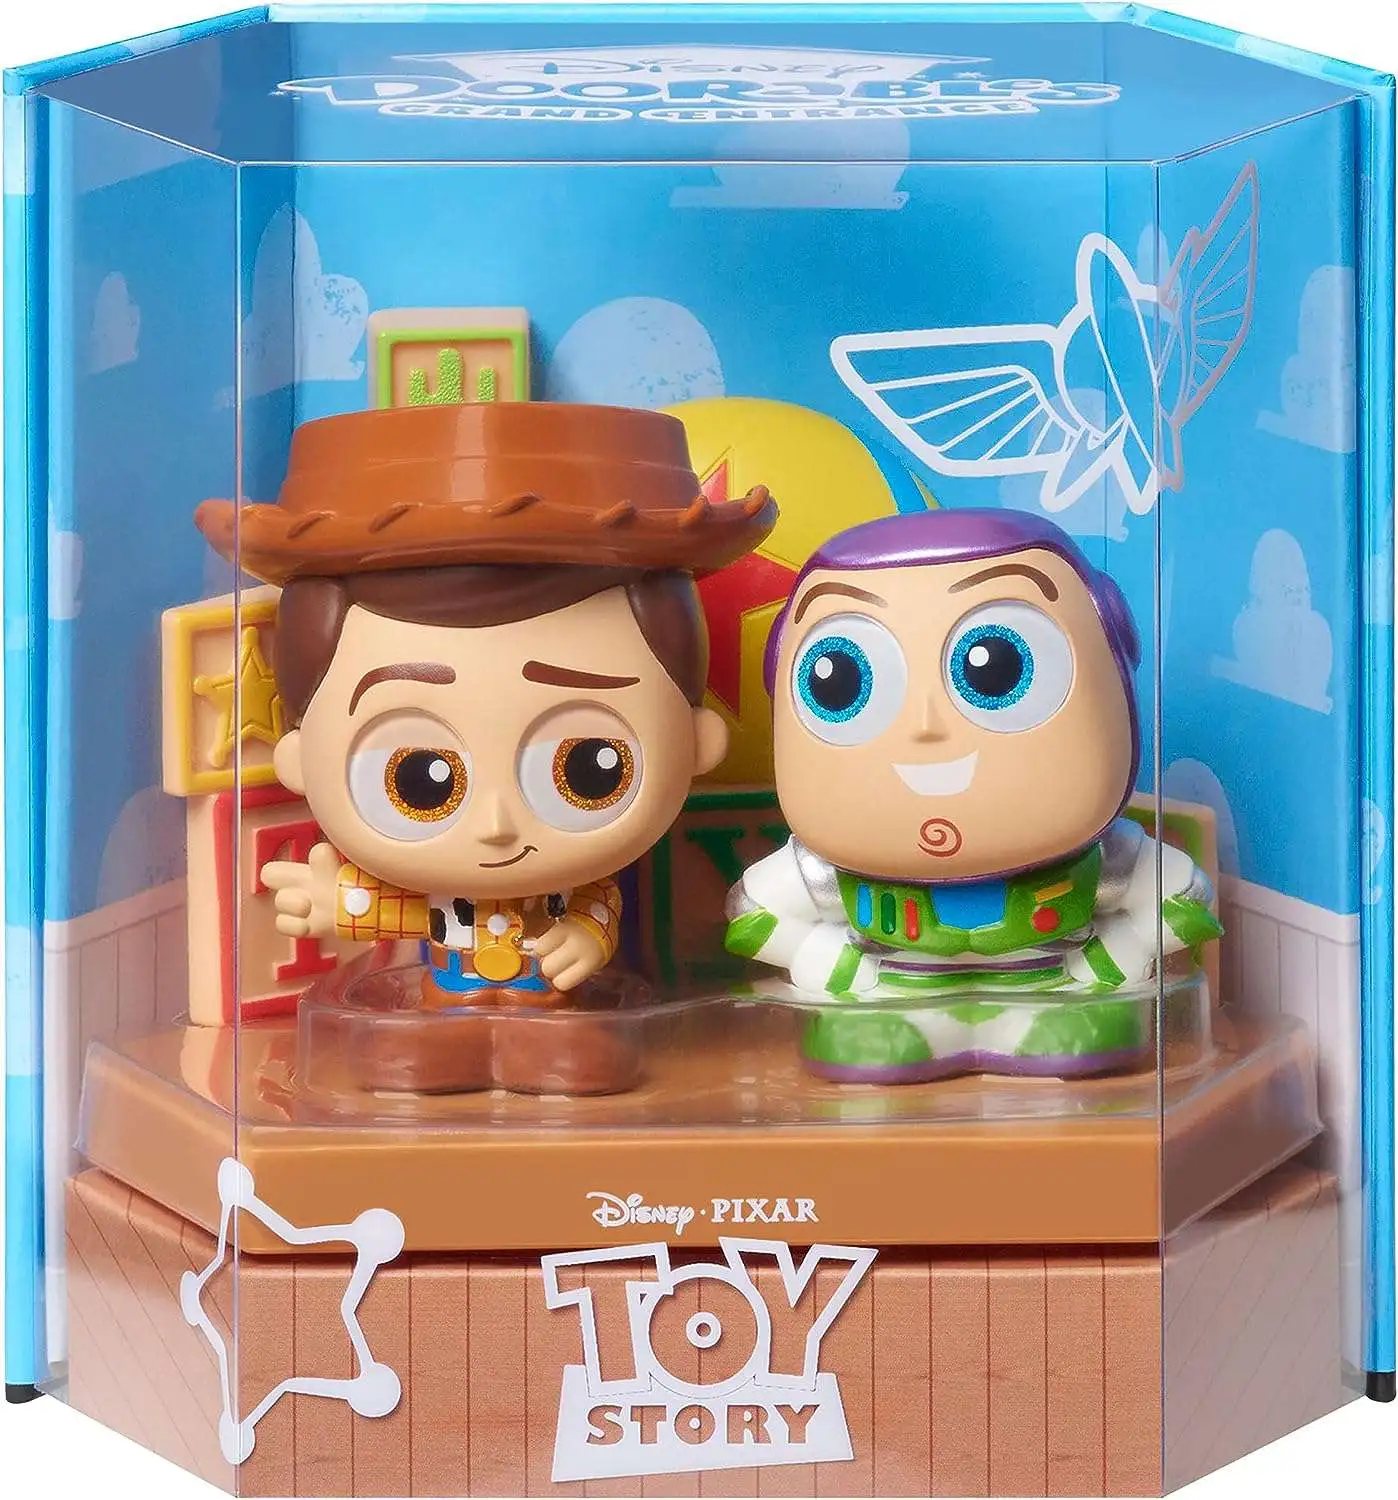 Kit Conjunto 5 Bonecos Toy Story Disney - Woody E Sua Turma